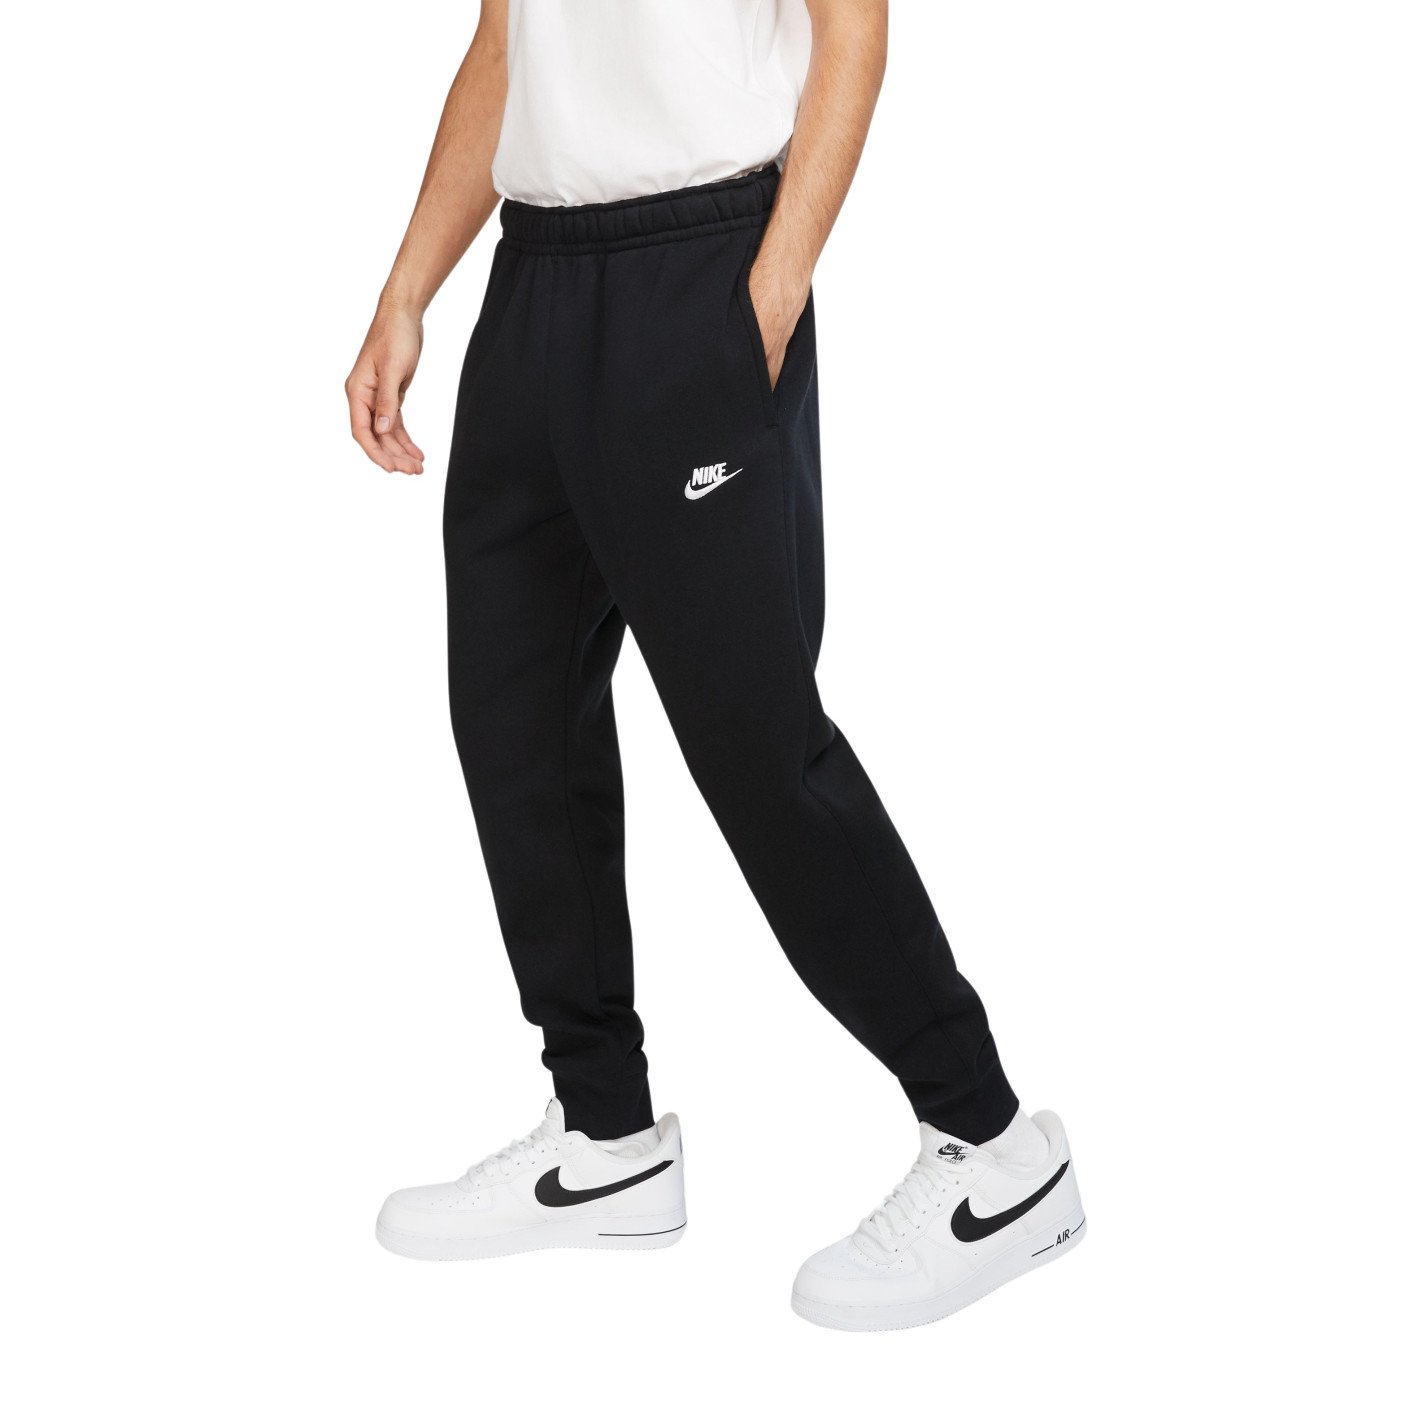 Nike sweatpants - Sweats & hoodies